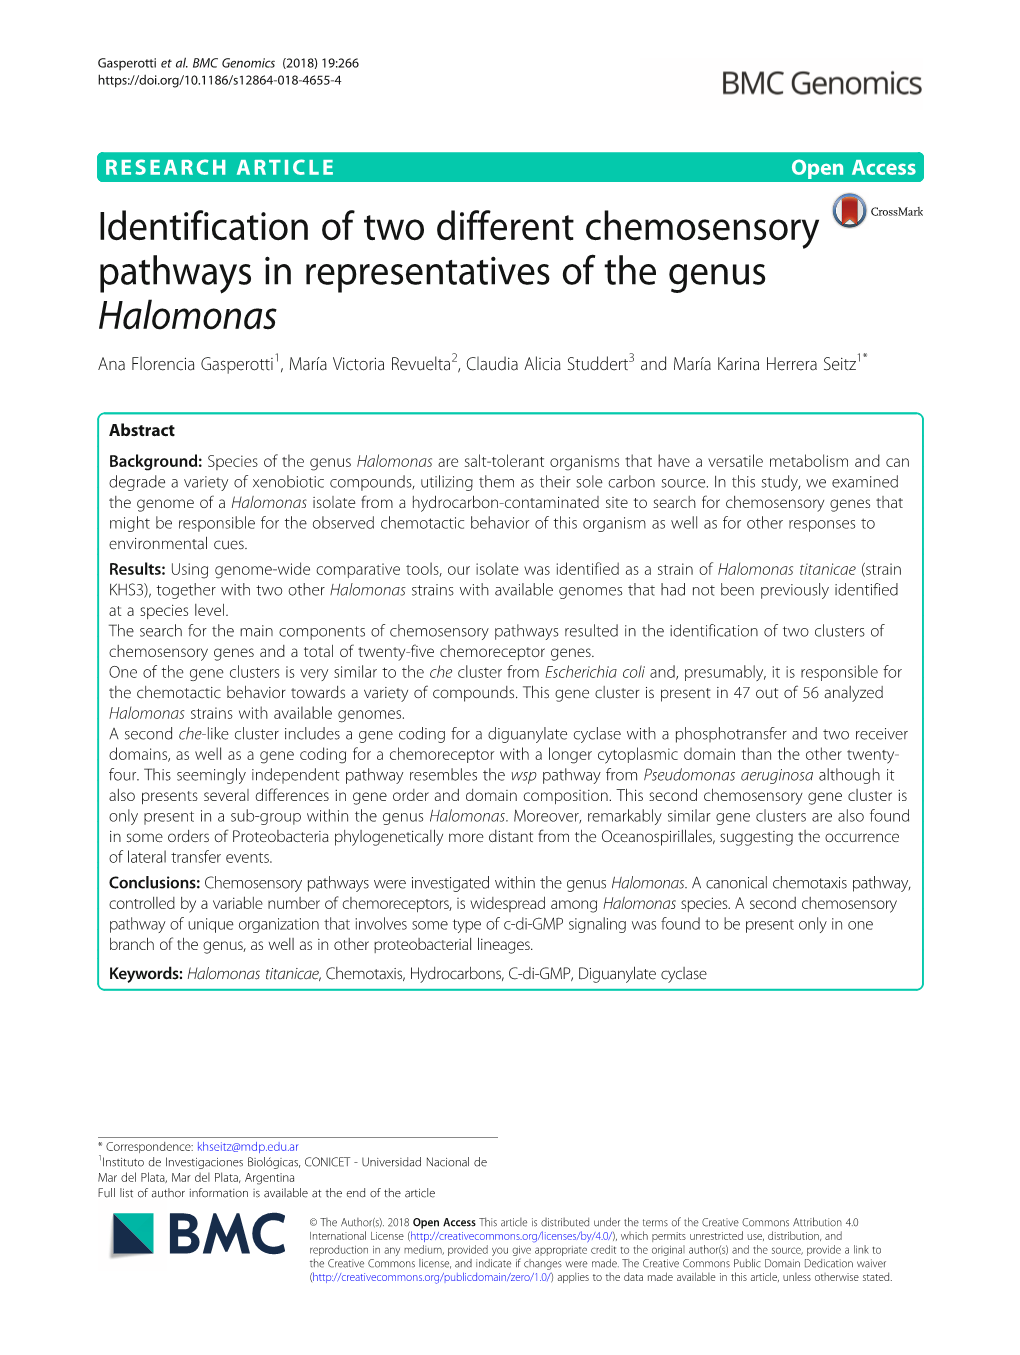 Identification of Two Different Chemosensory Pathways in Representatives of the Genus Halomonas